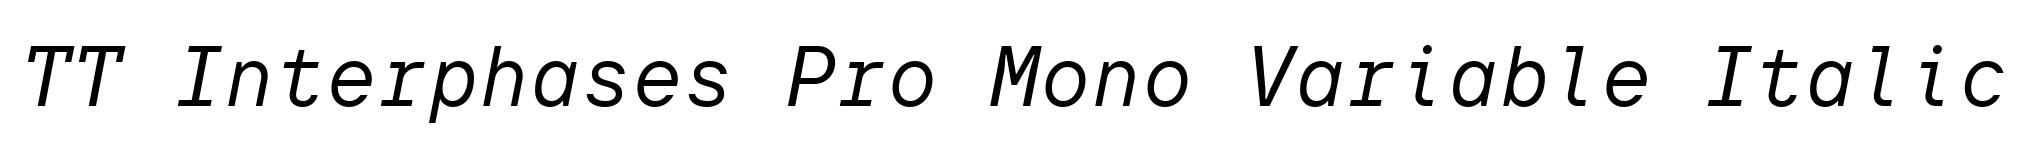 TT Interphases Pro Mono Variable Italic image